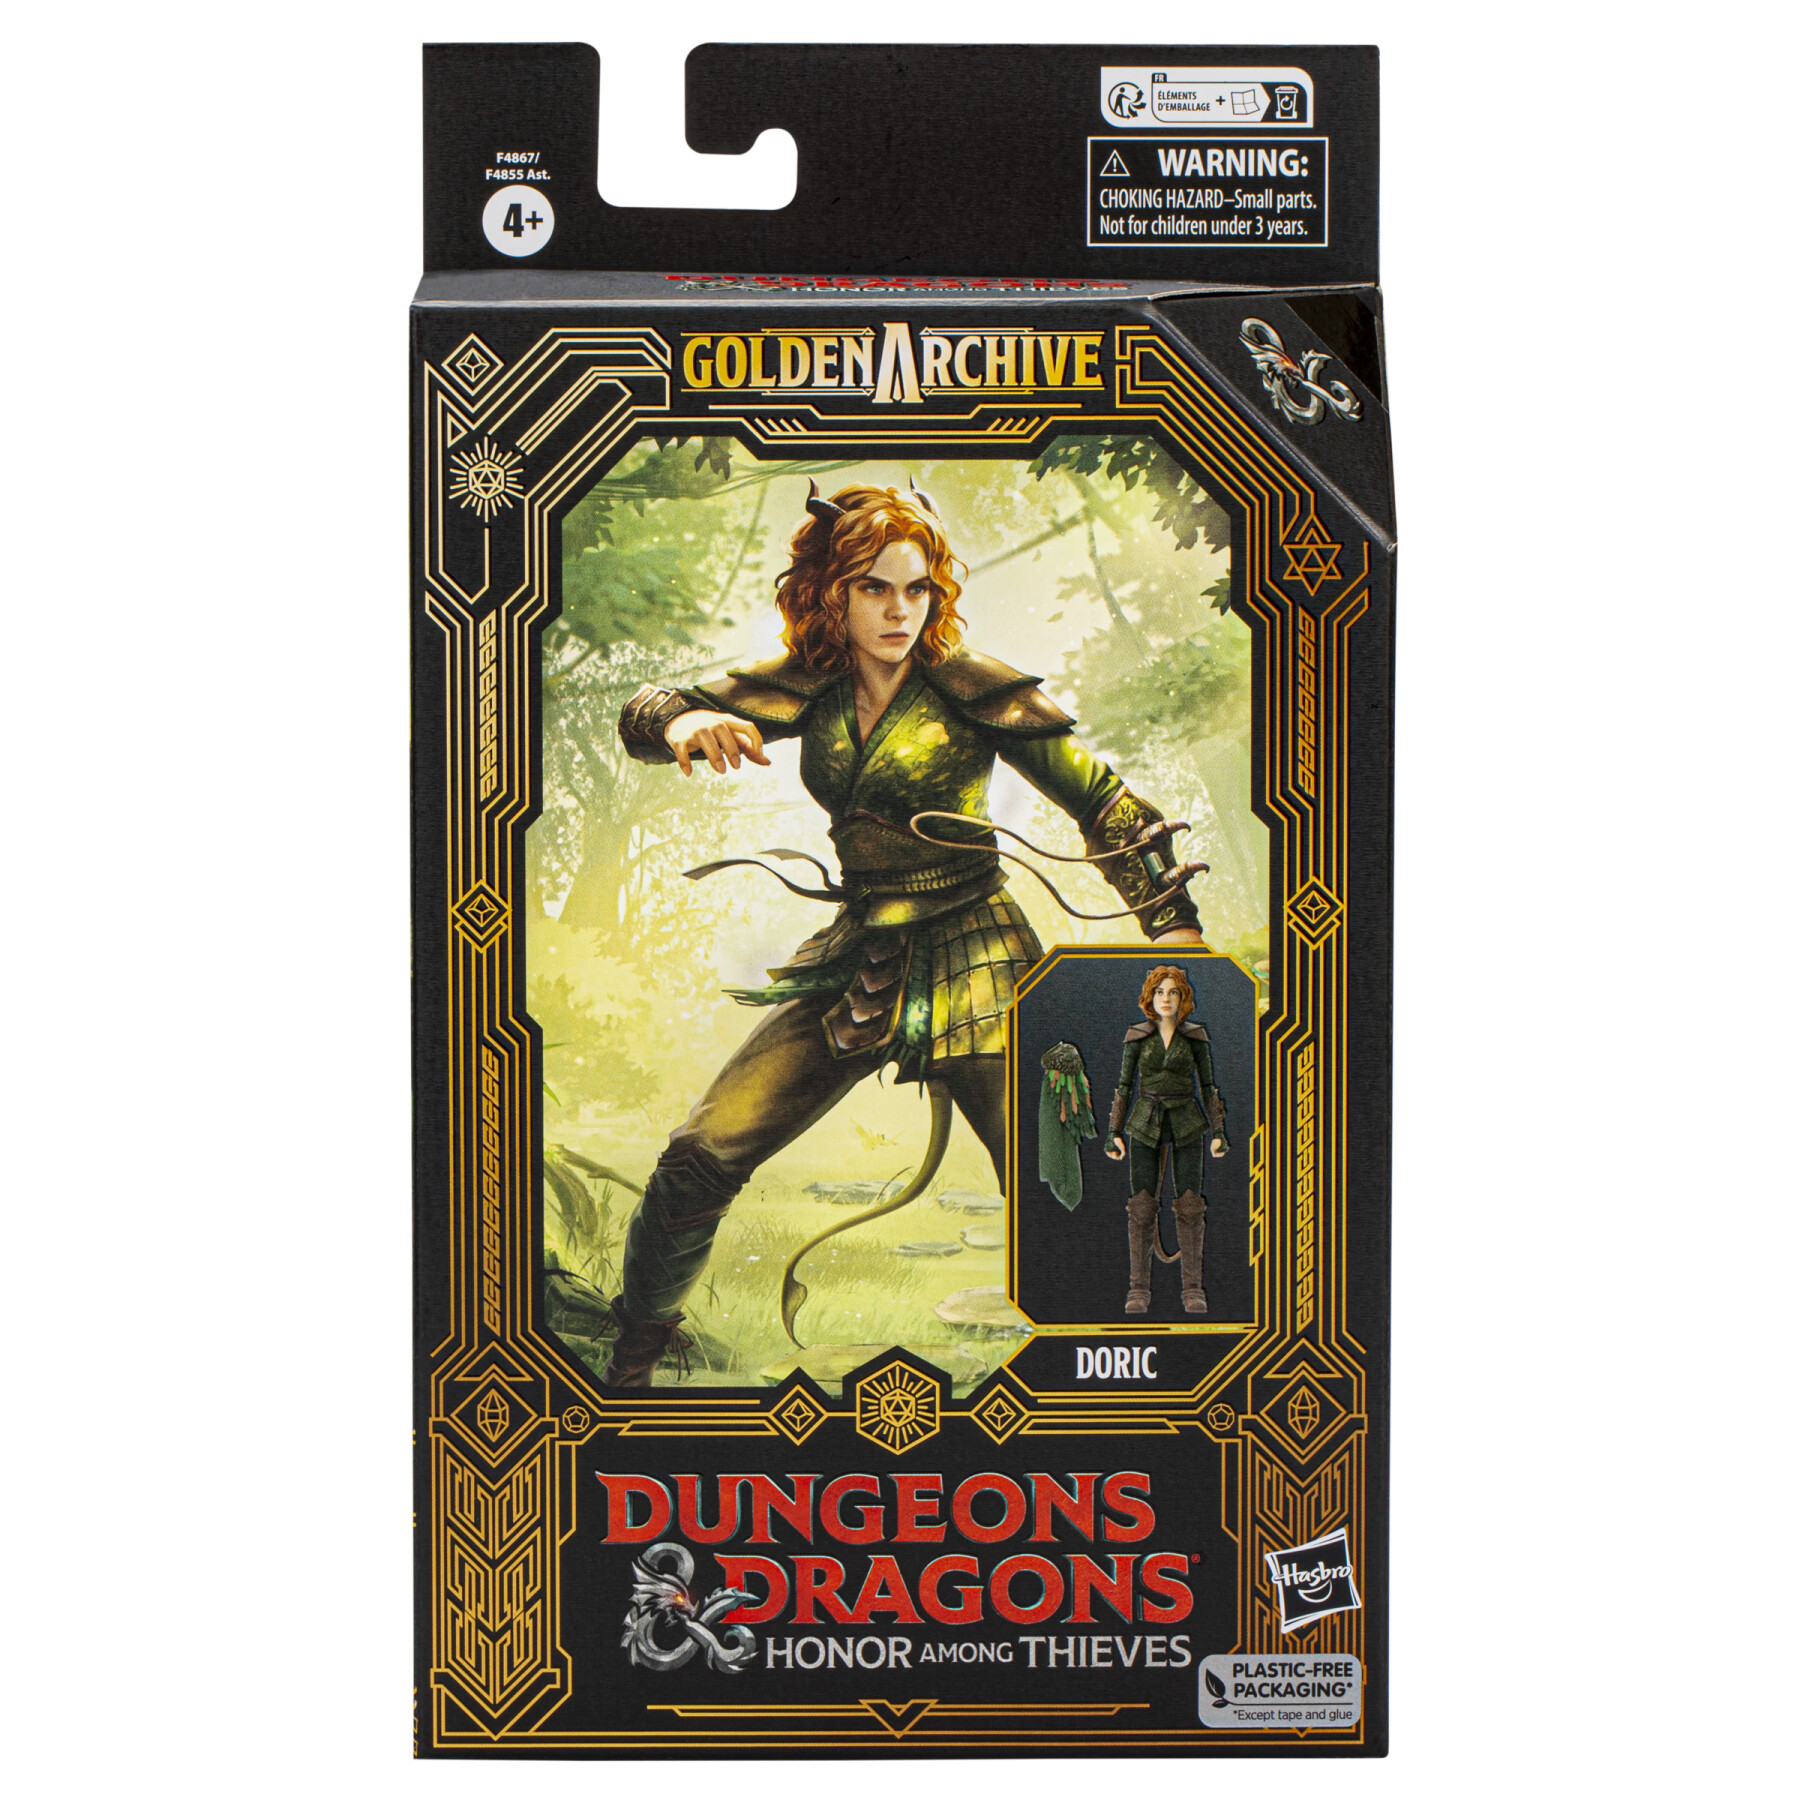 Dungeons & dragons: l'onore dei ladri, golden archive, doric, action figure collezionabile per adulti, action figure d&d in scala da 15 cm - 